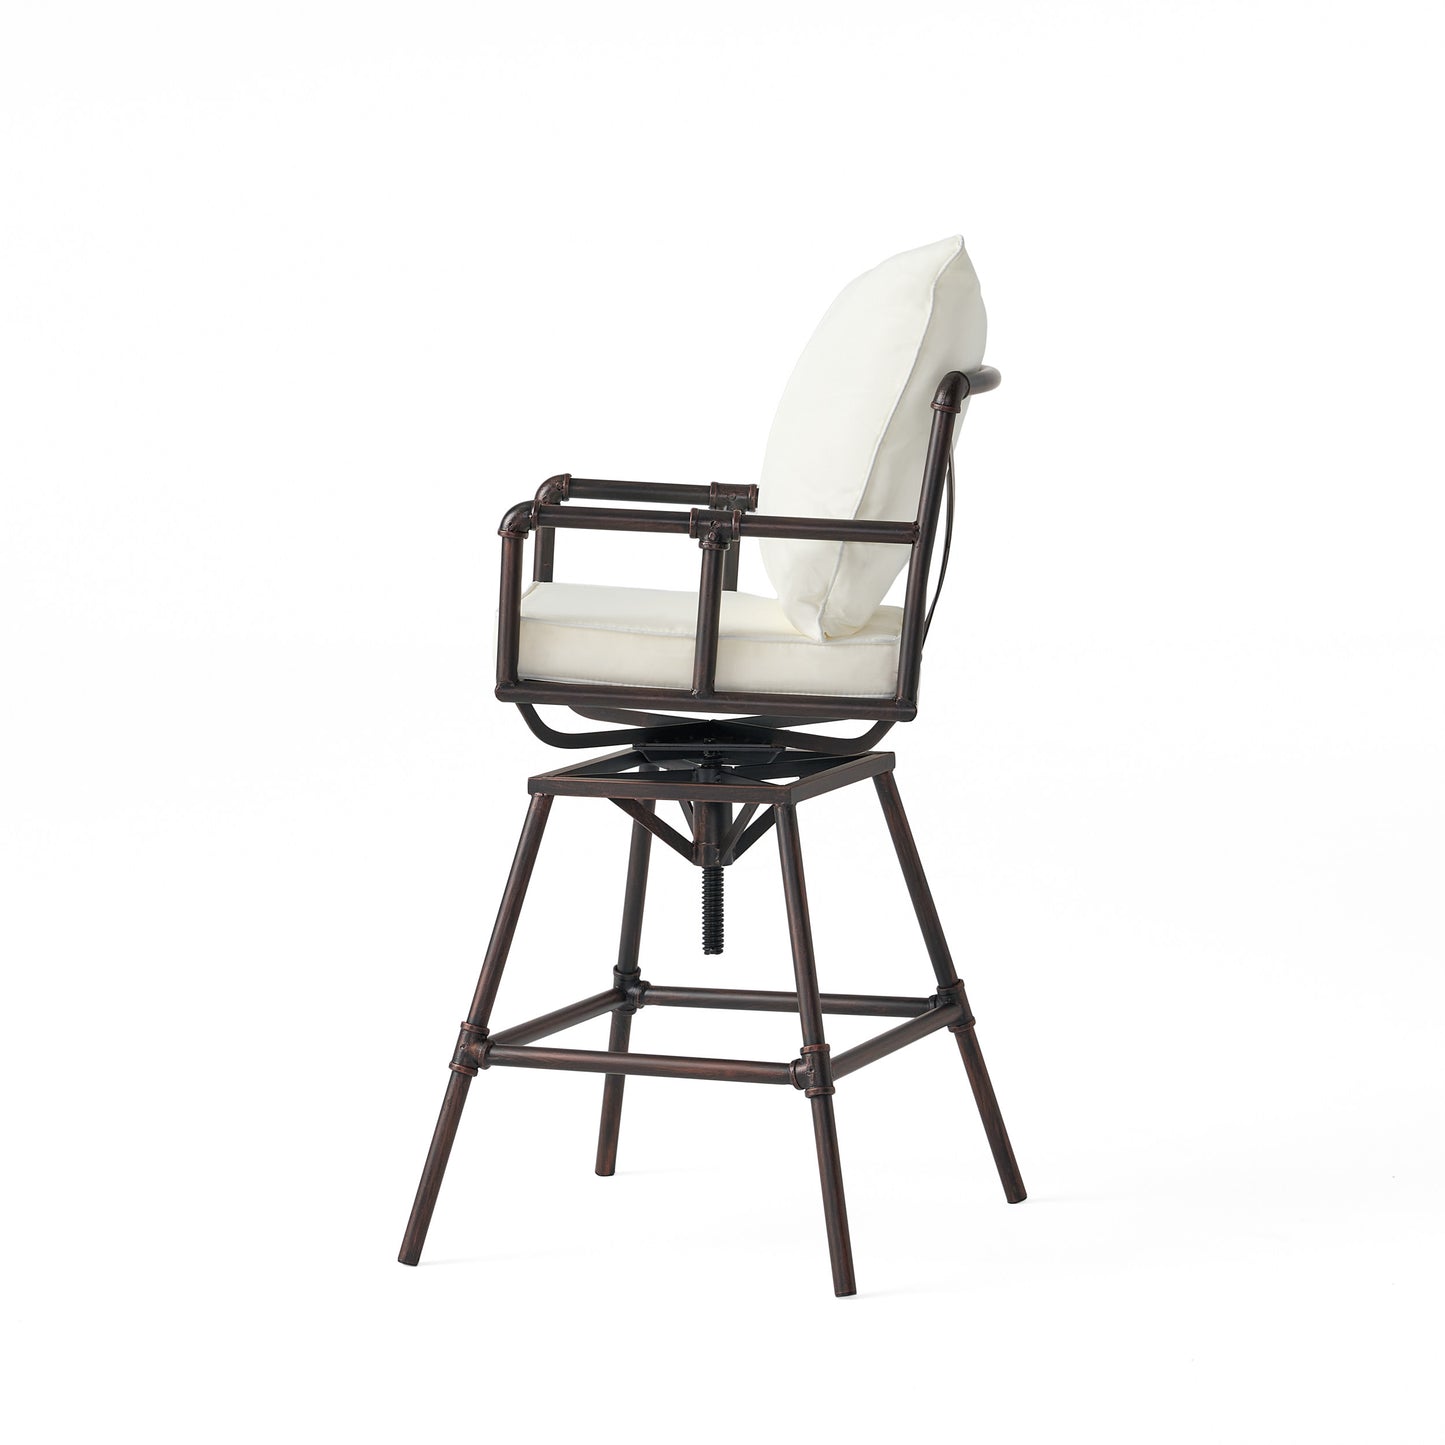 Varick Outdoor Adjustable Pipe Barstools (Set of 2), Black Copper and Beige